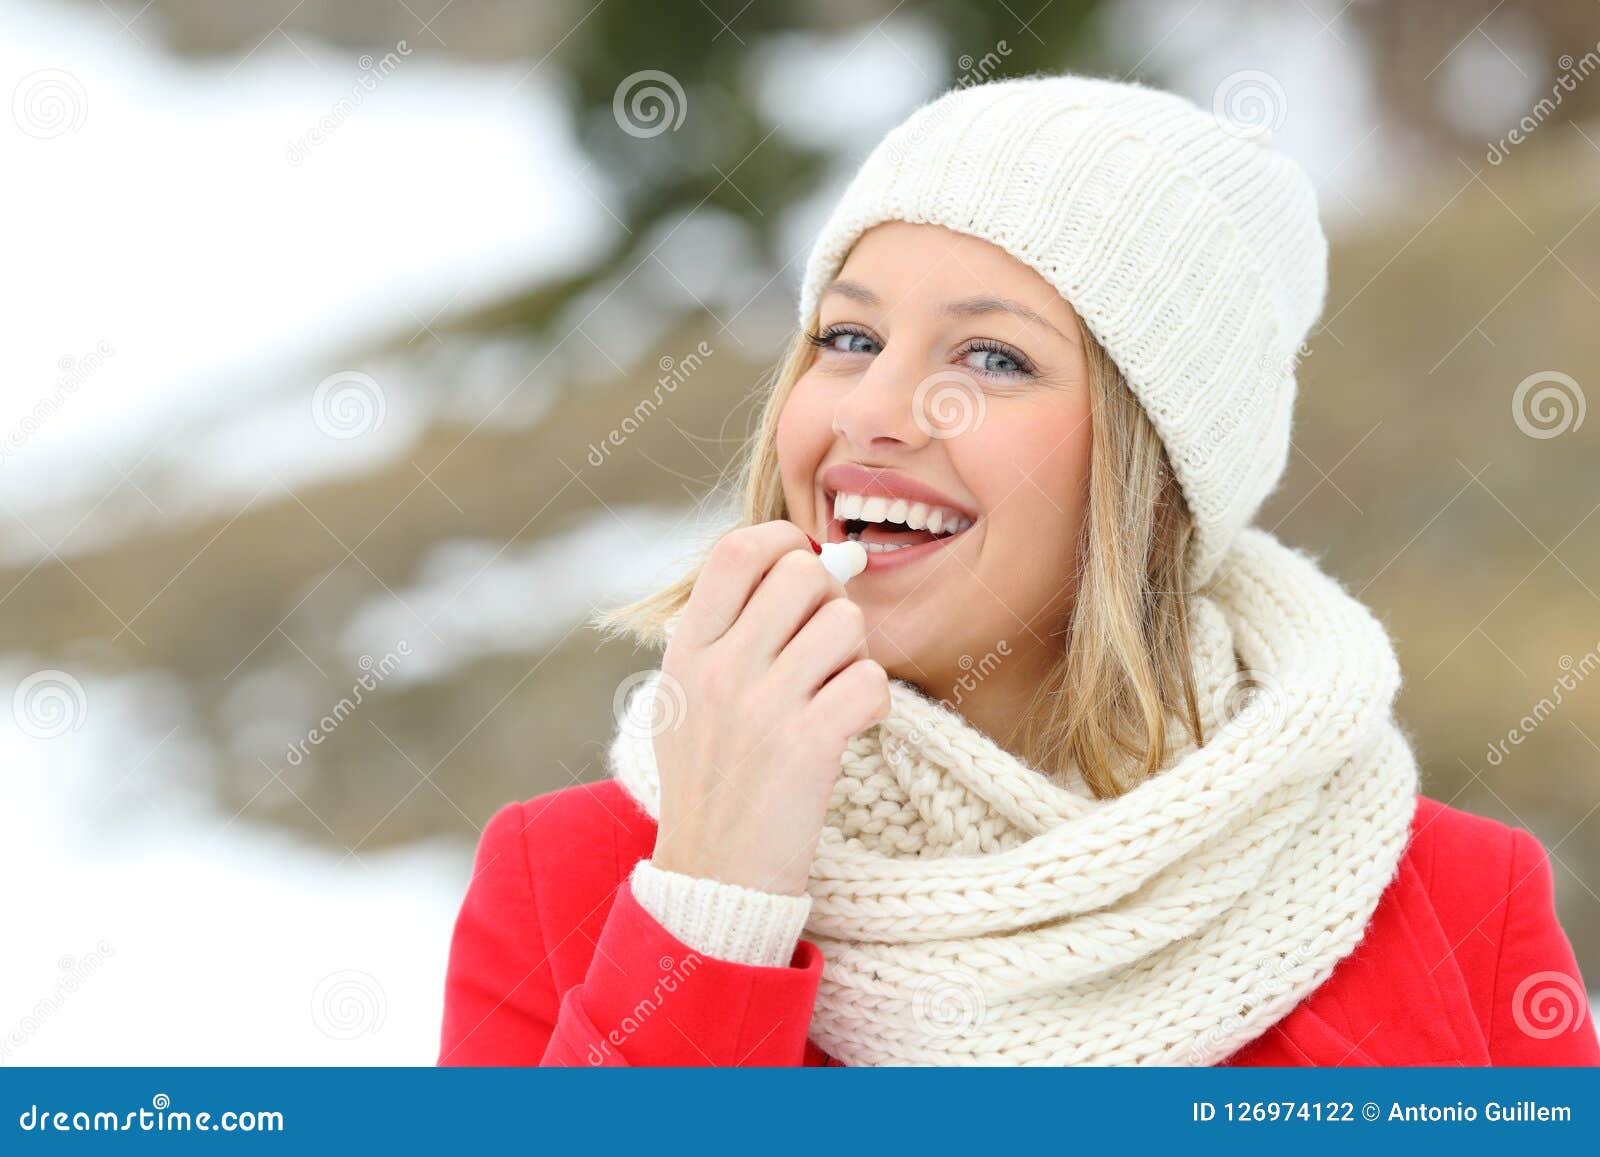 happy woman applying lip balm outdoors in winter